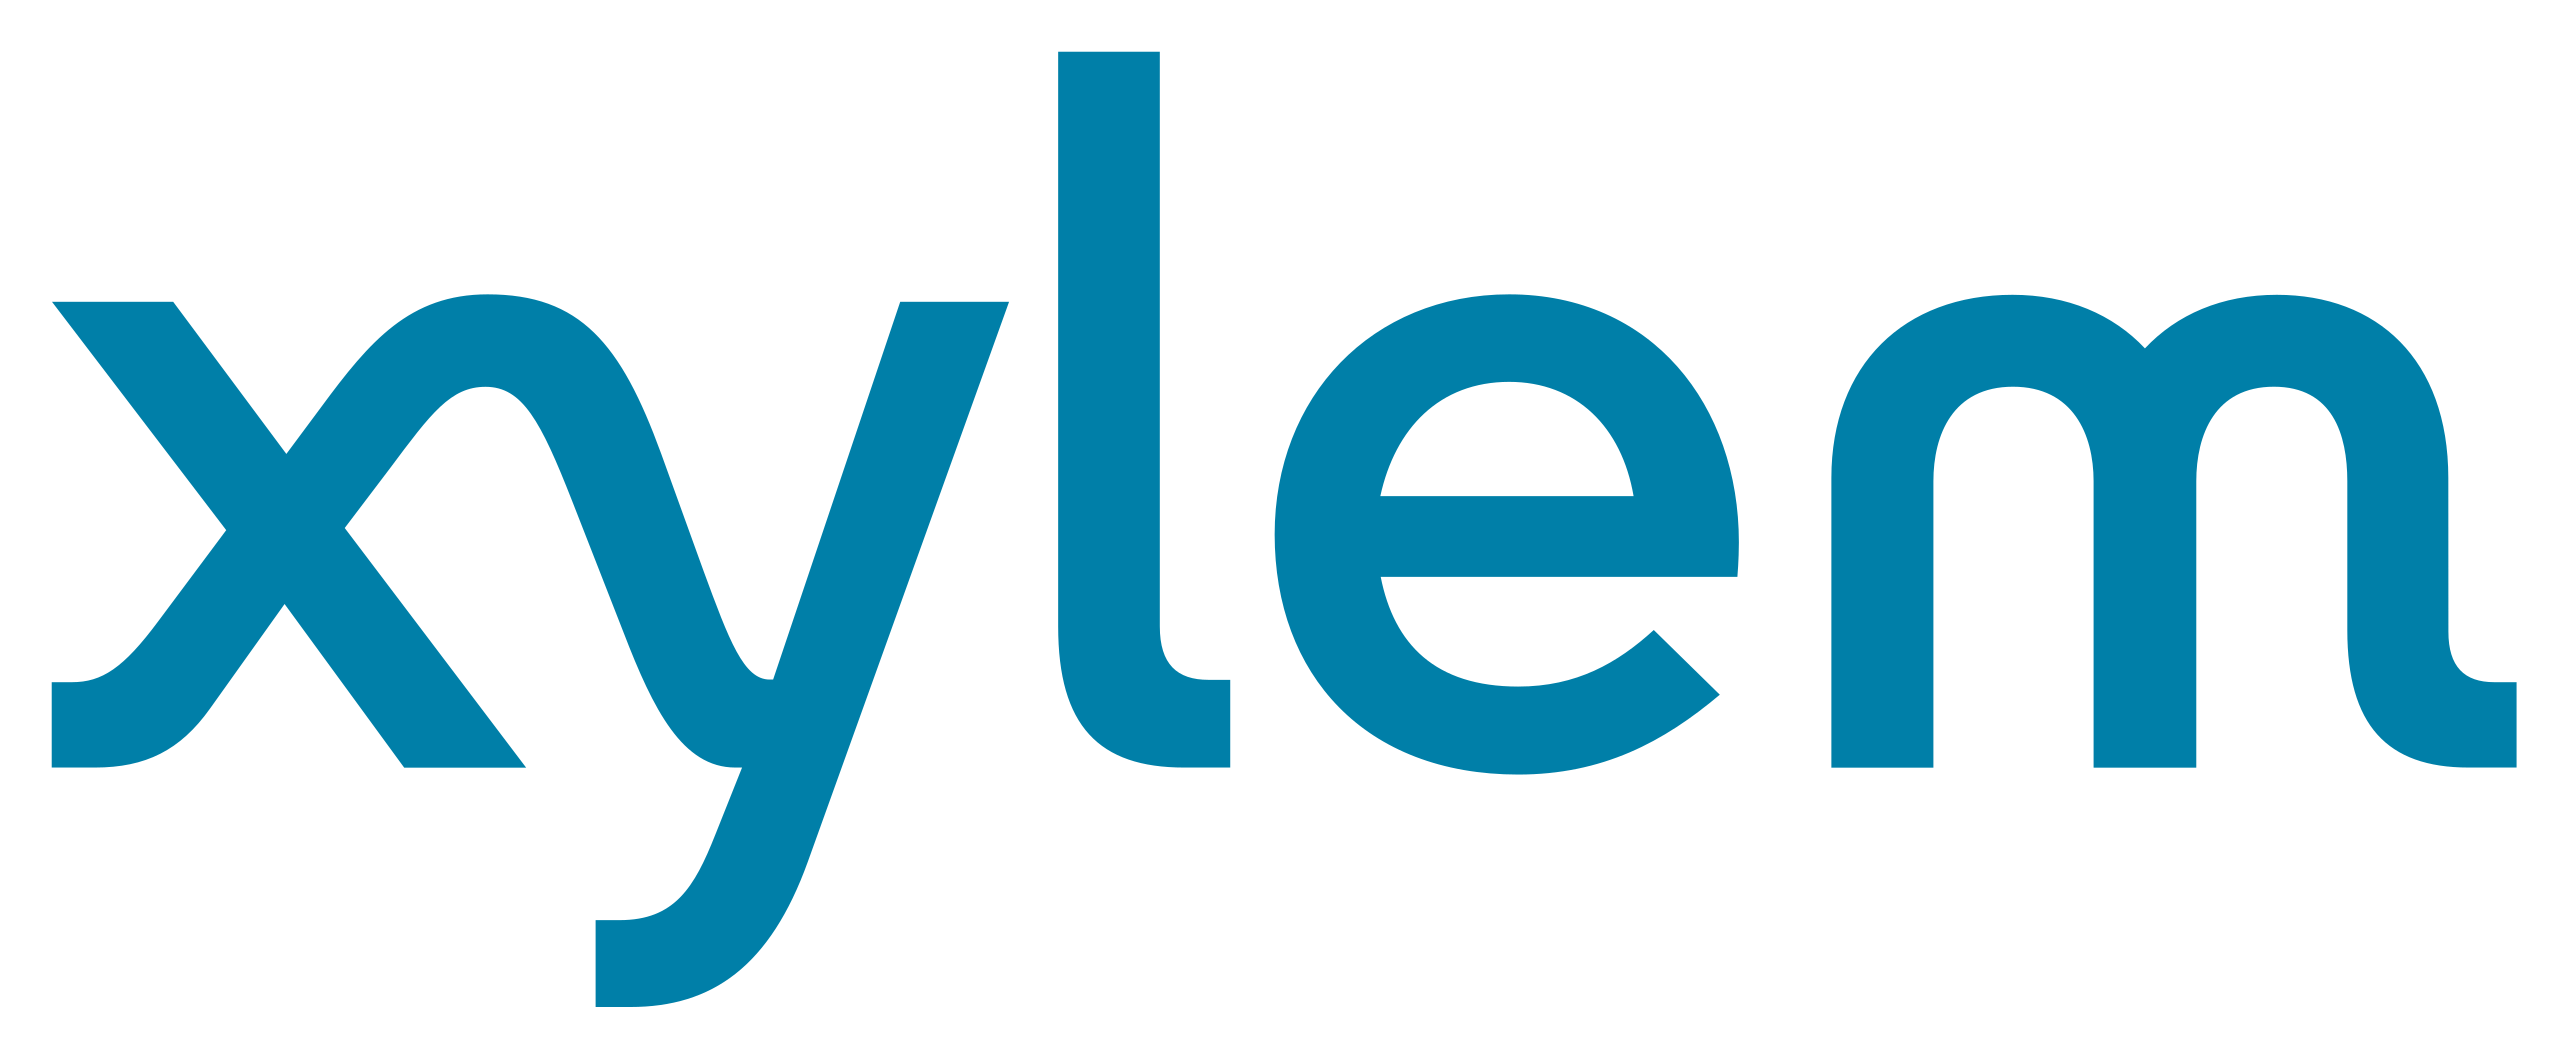 Xylem_Logo.svg.png